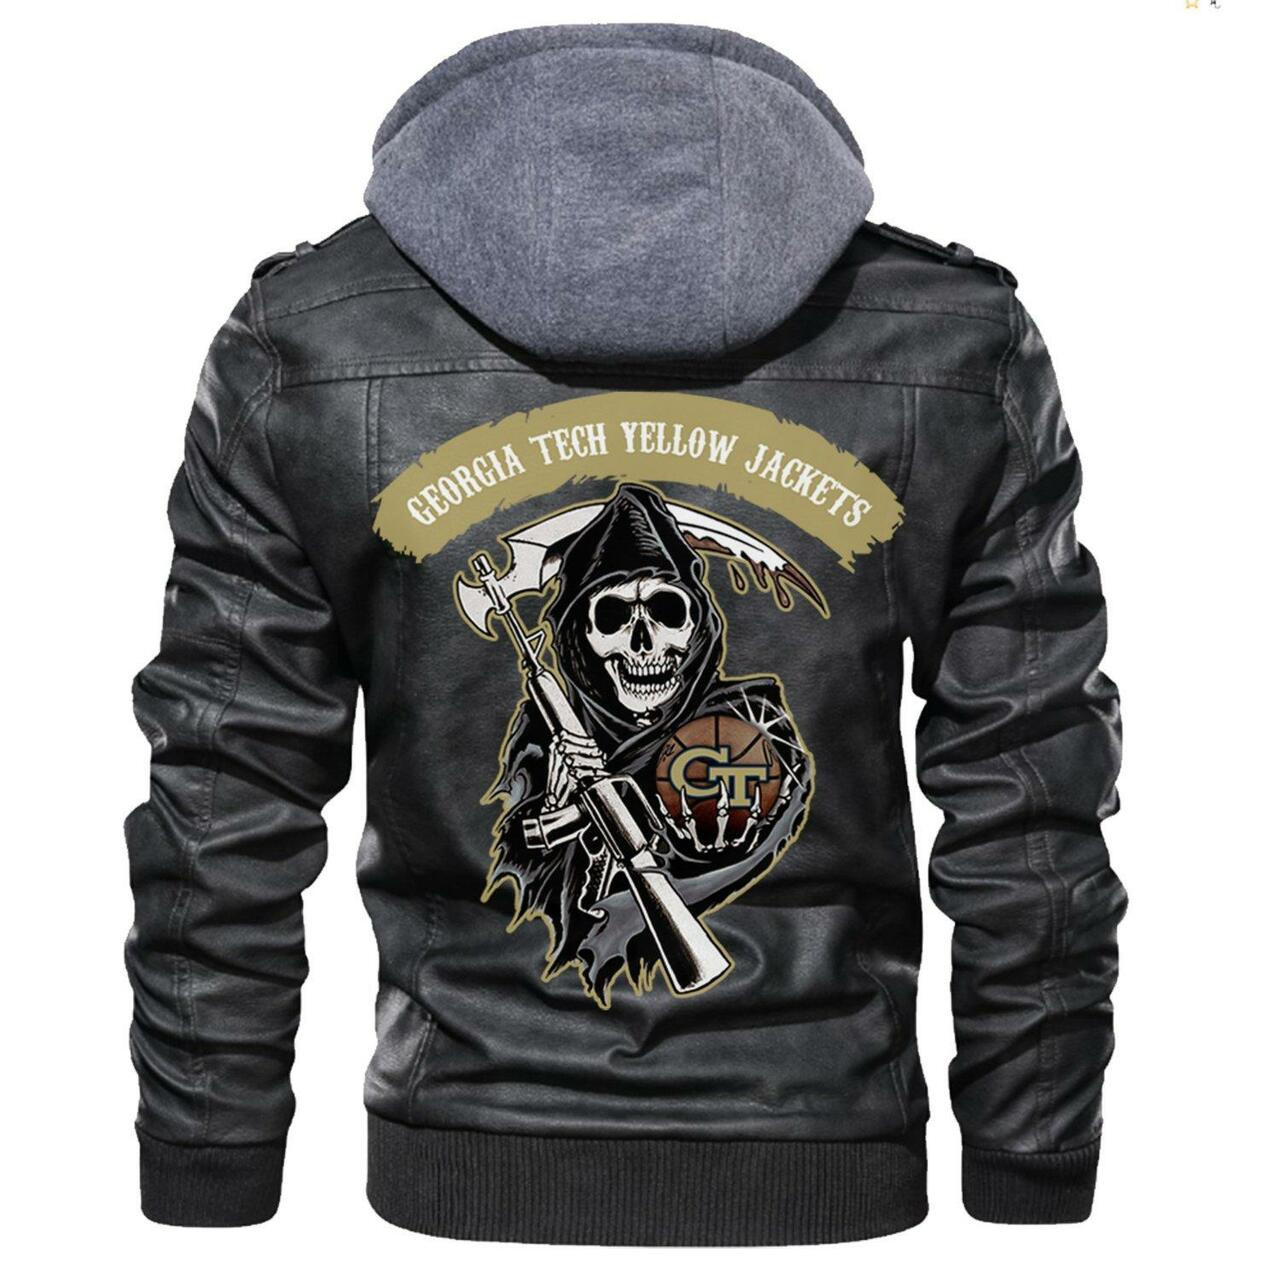 Top leather jacket Sells Best on Techcomshop 91